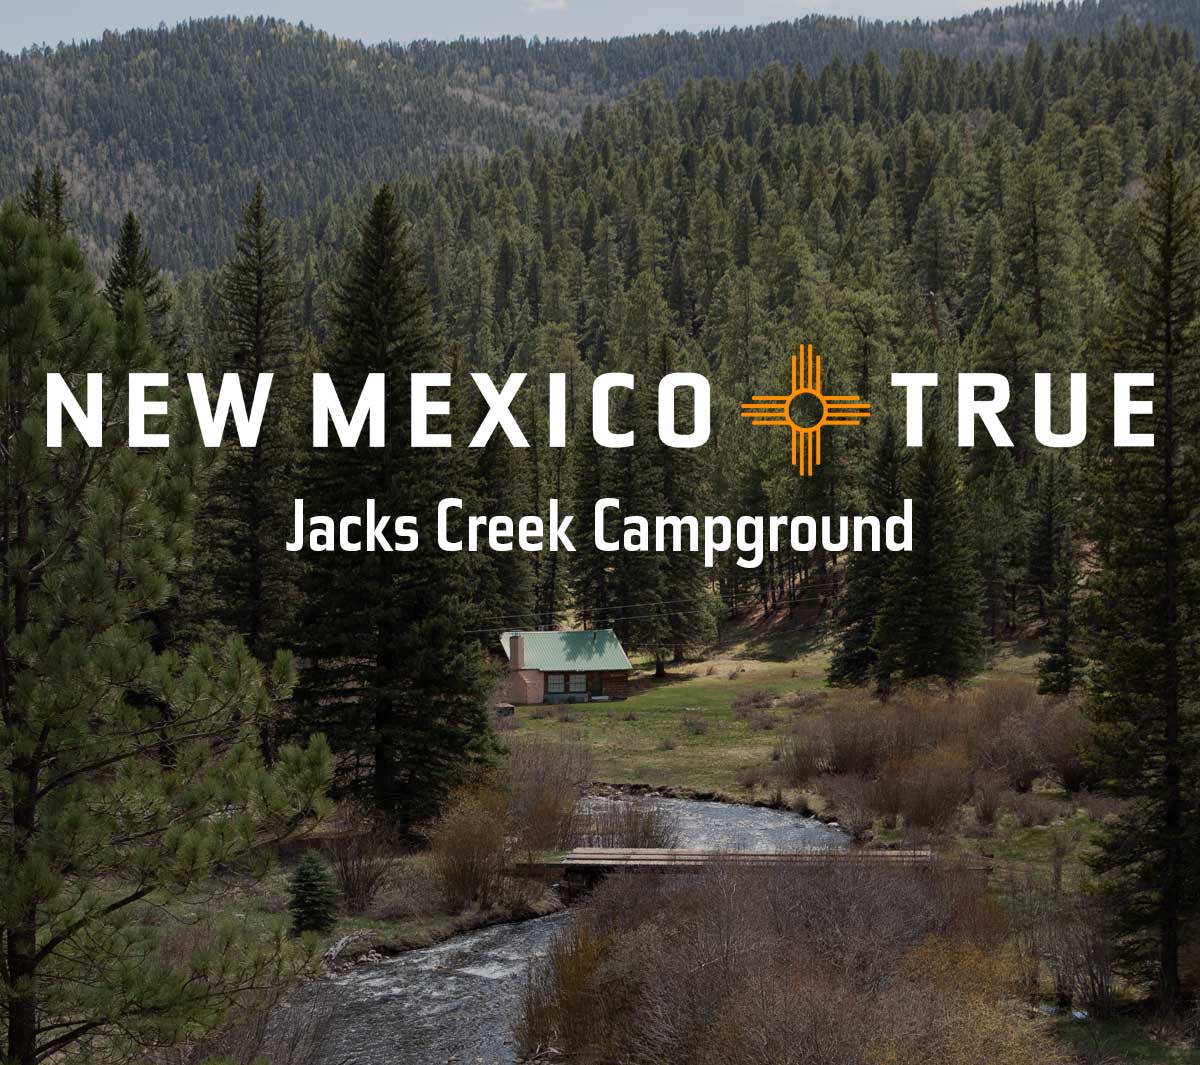 Jacks Creek Campground